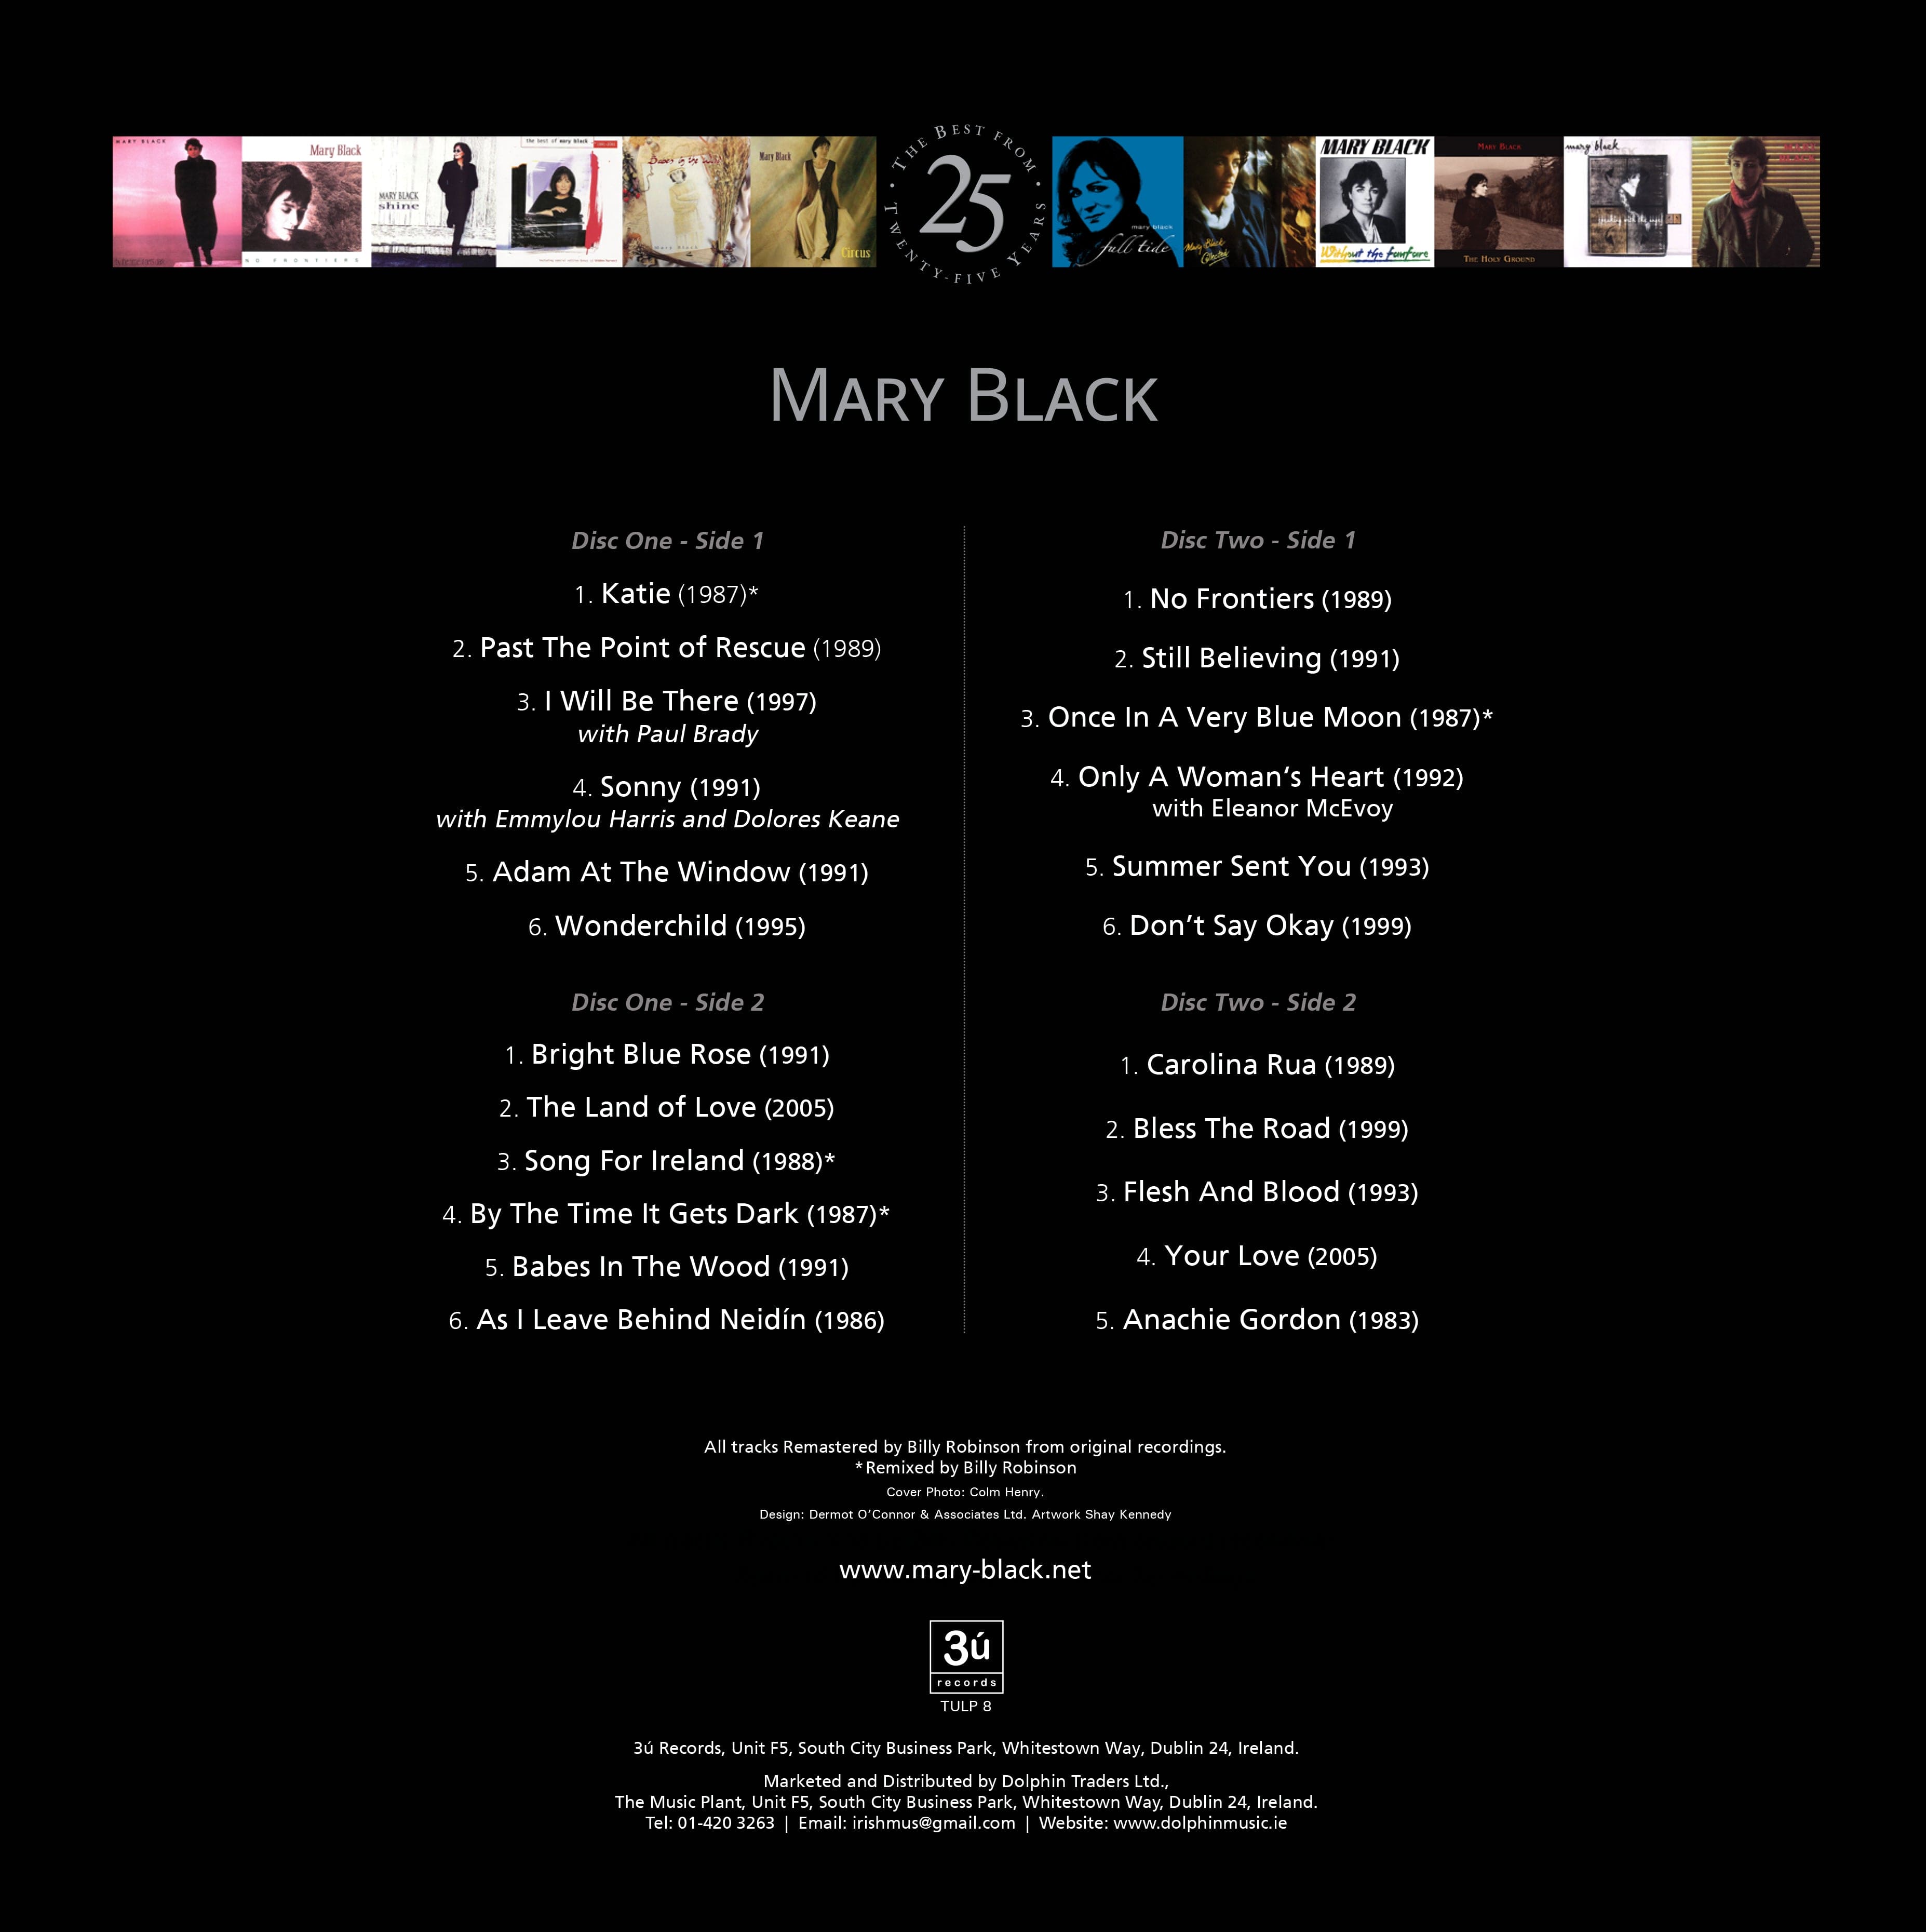 The Best From Twenty Five Years - Mary Black [Vinyl]